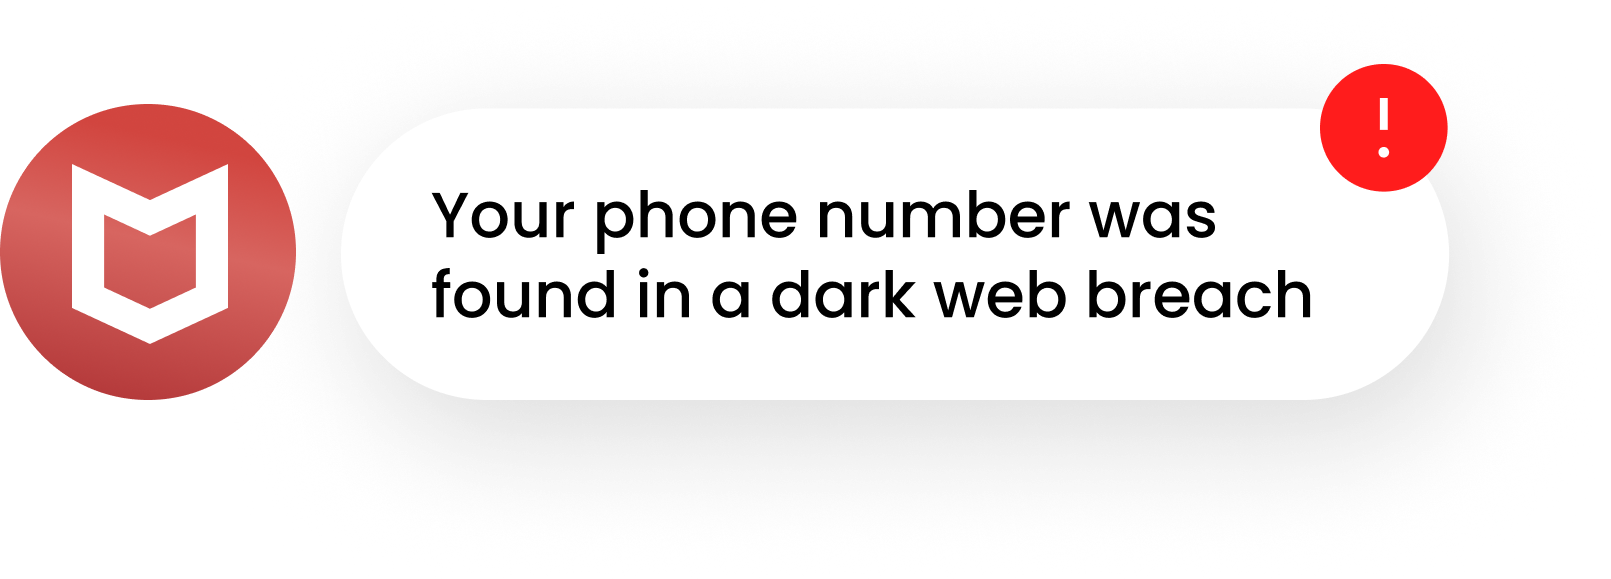 your phone number was found in a dark web breach